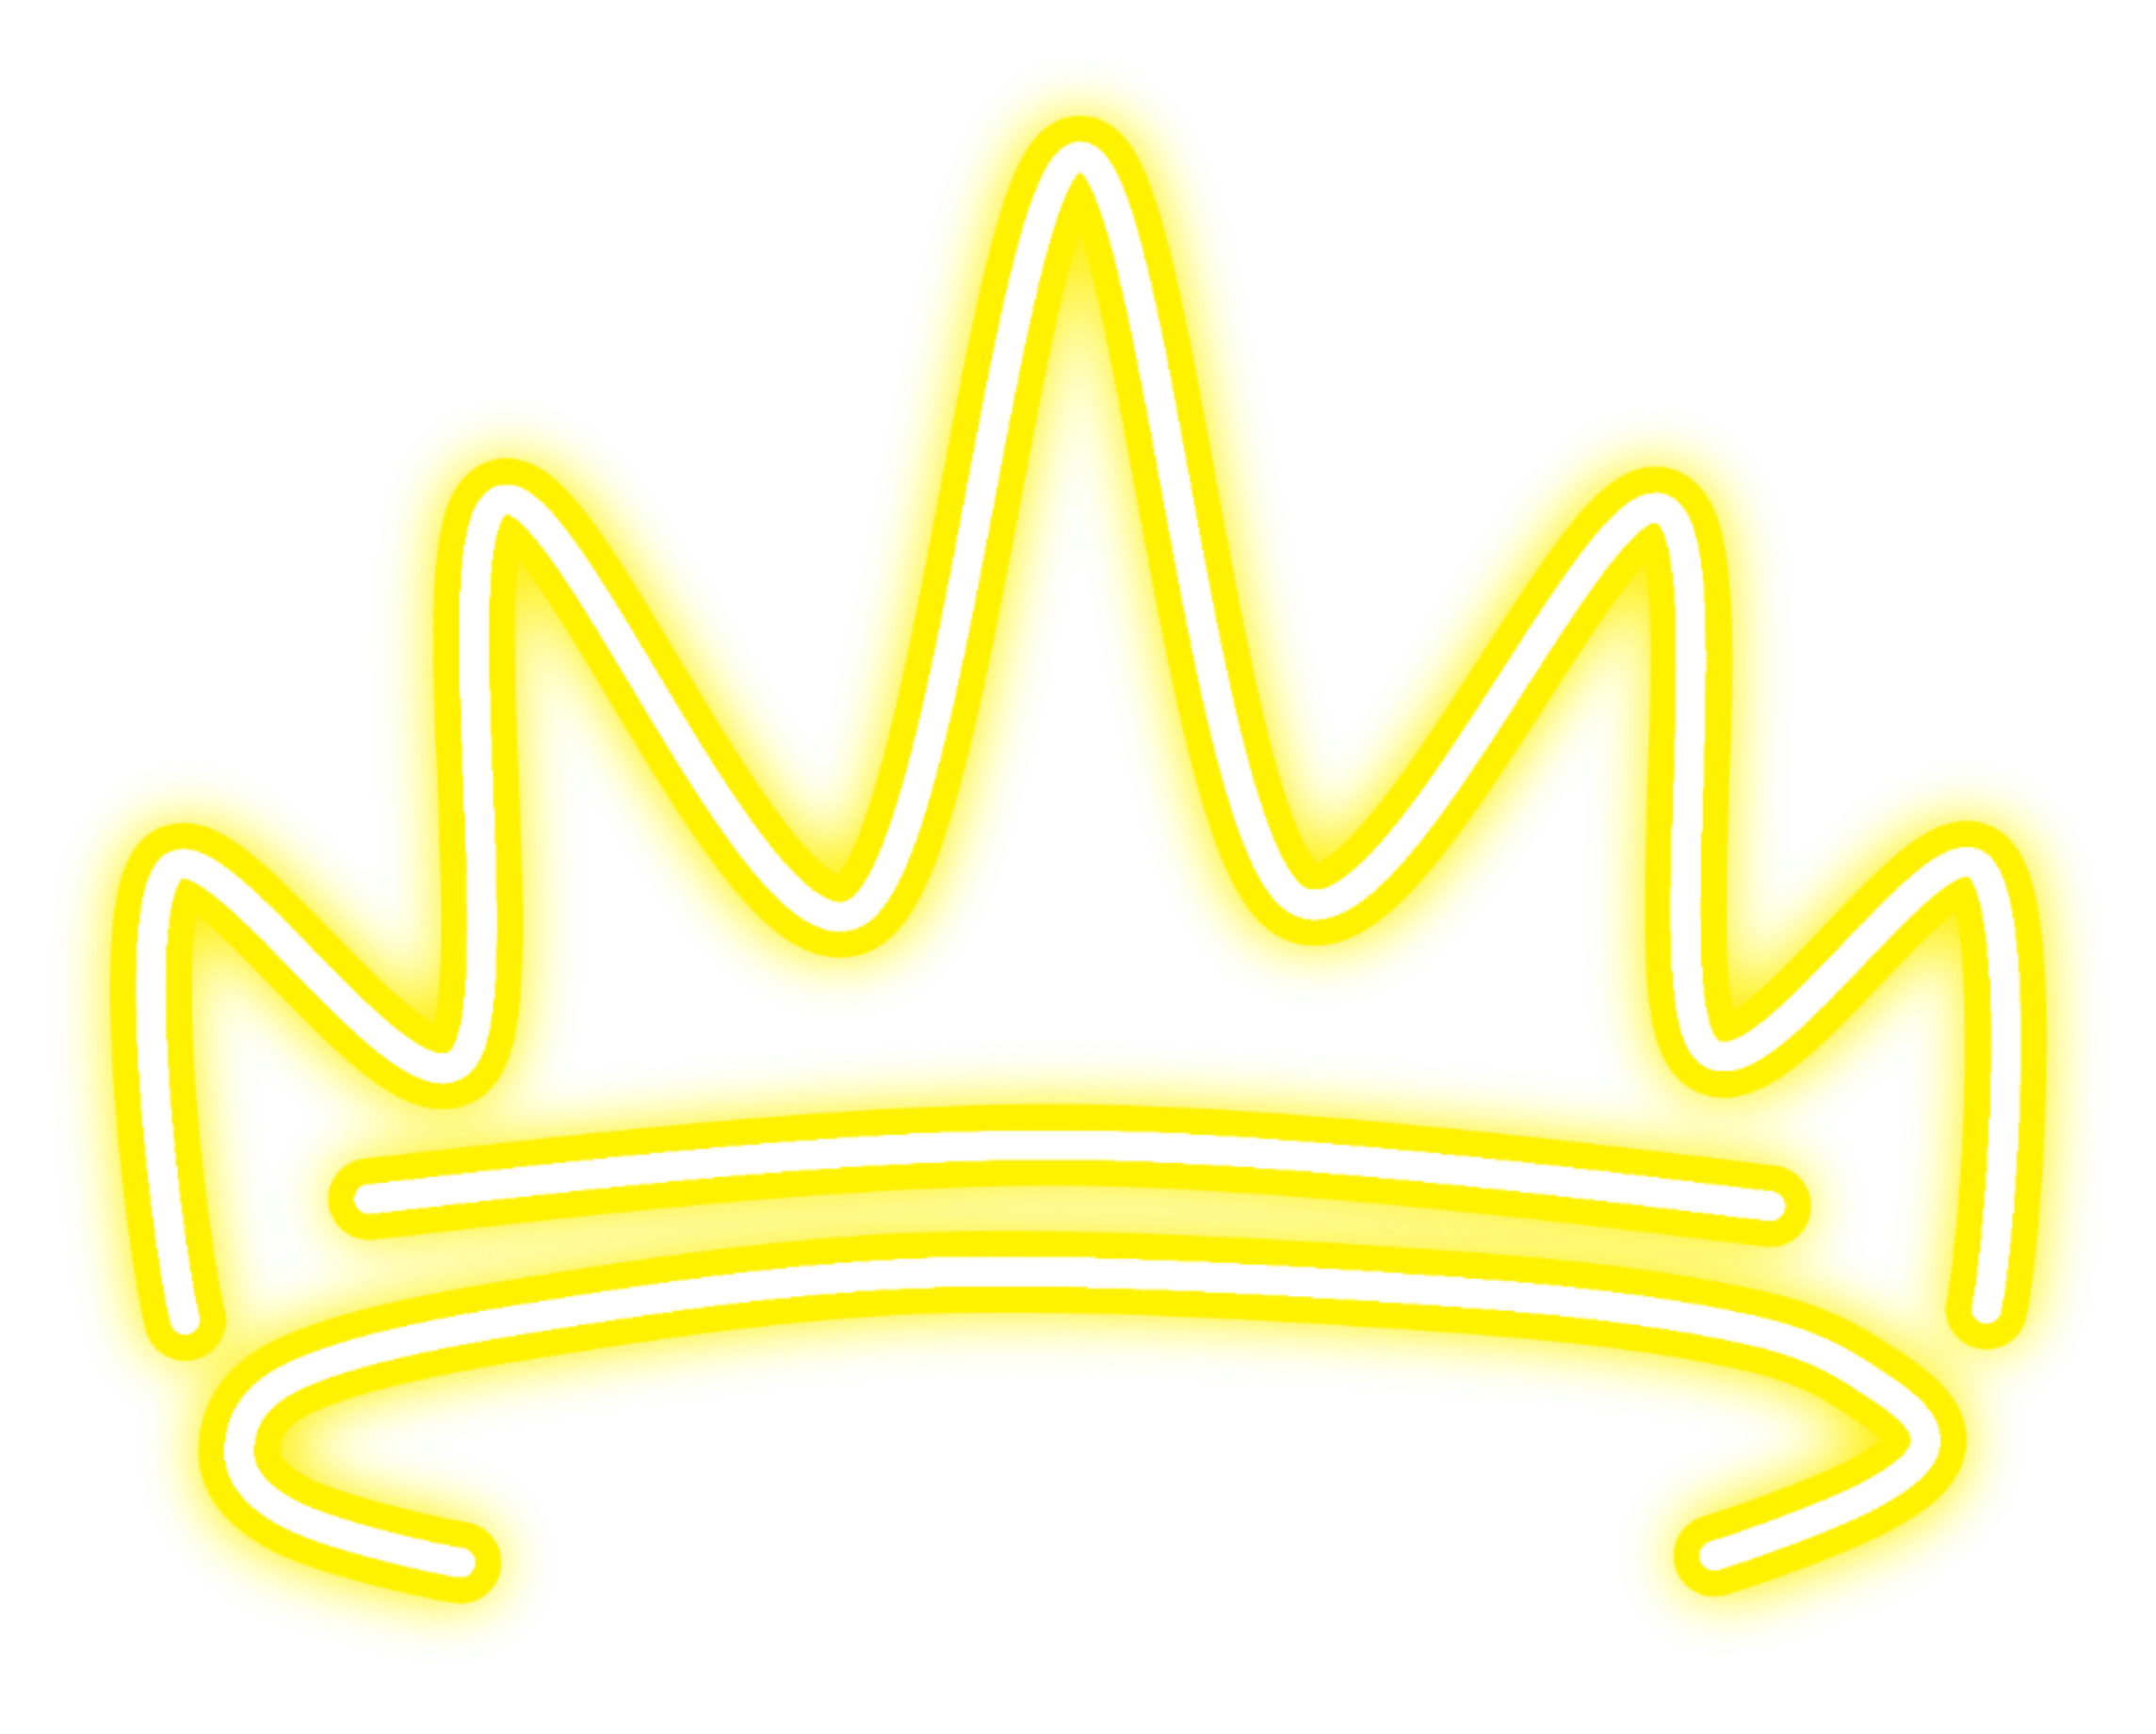 символ корона для ников пабг фото 29